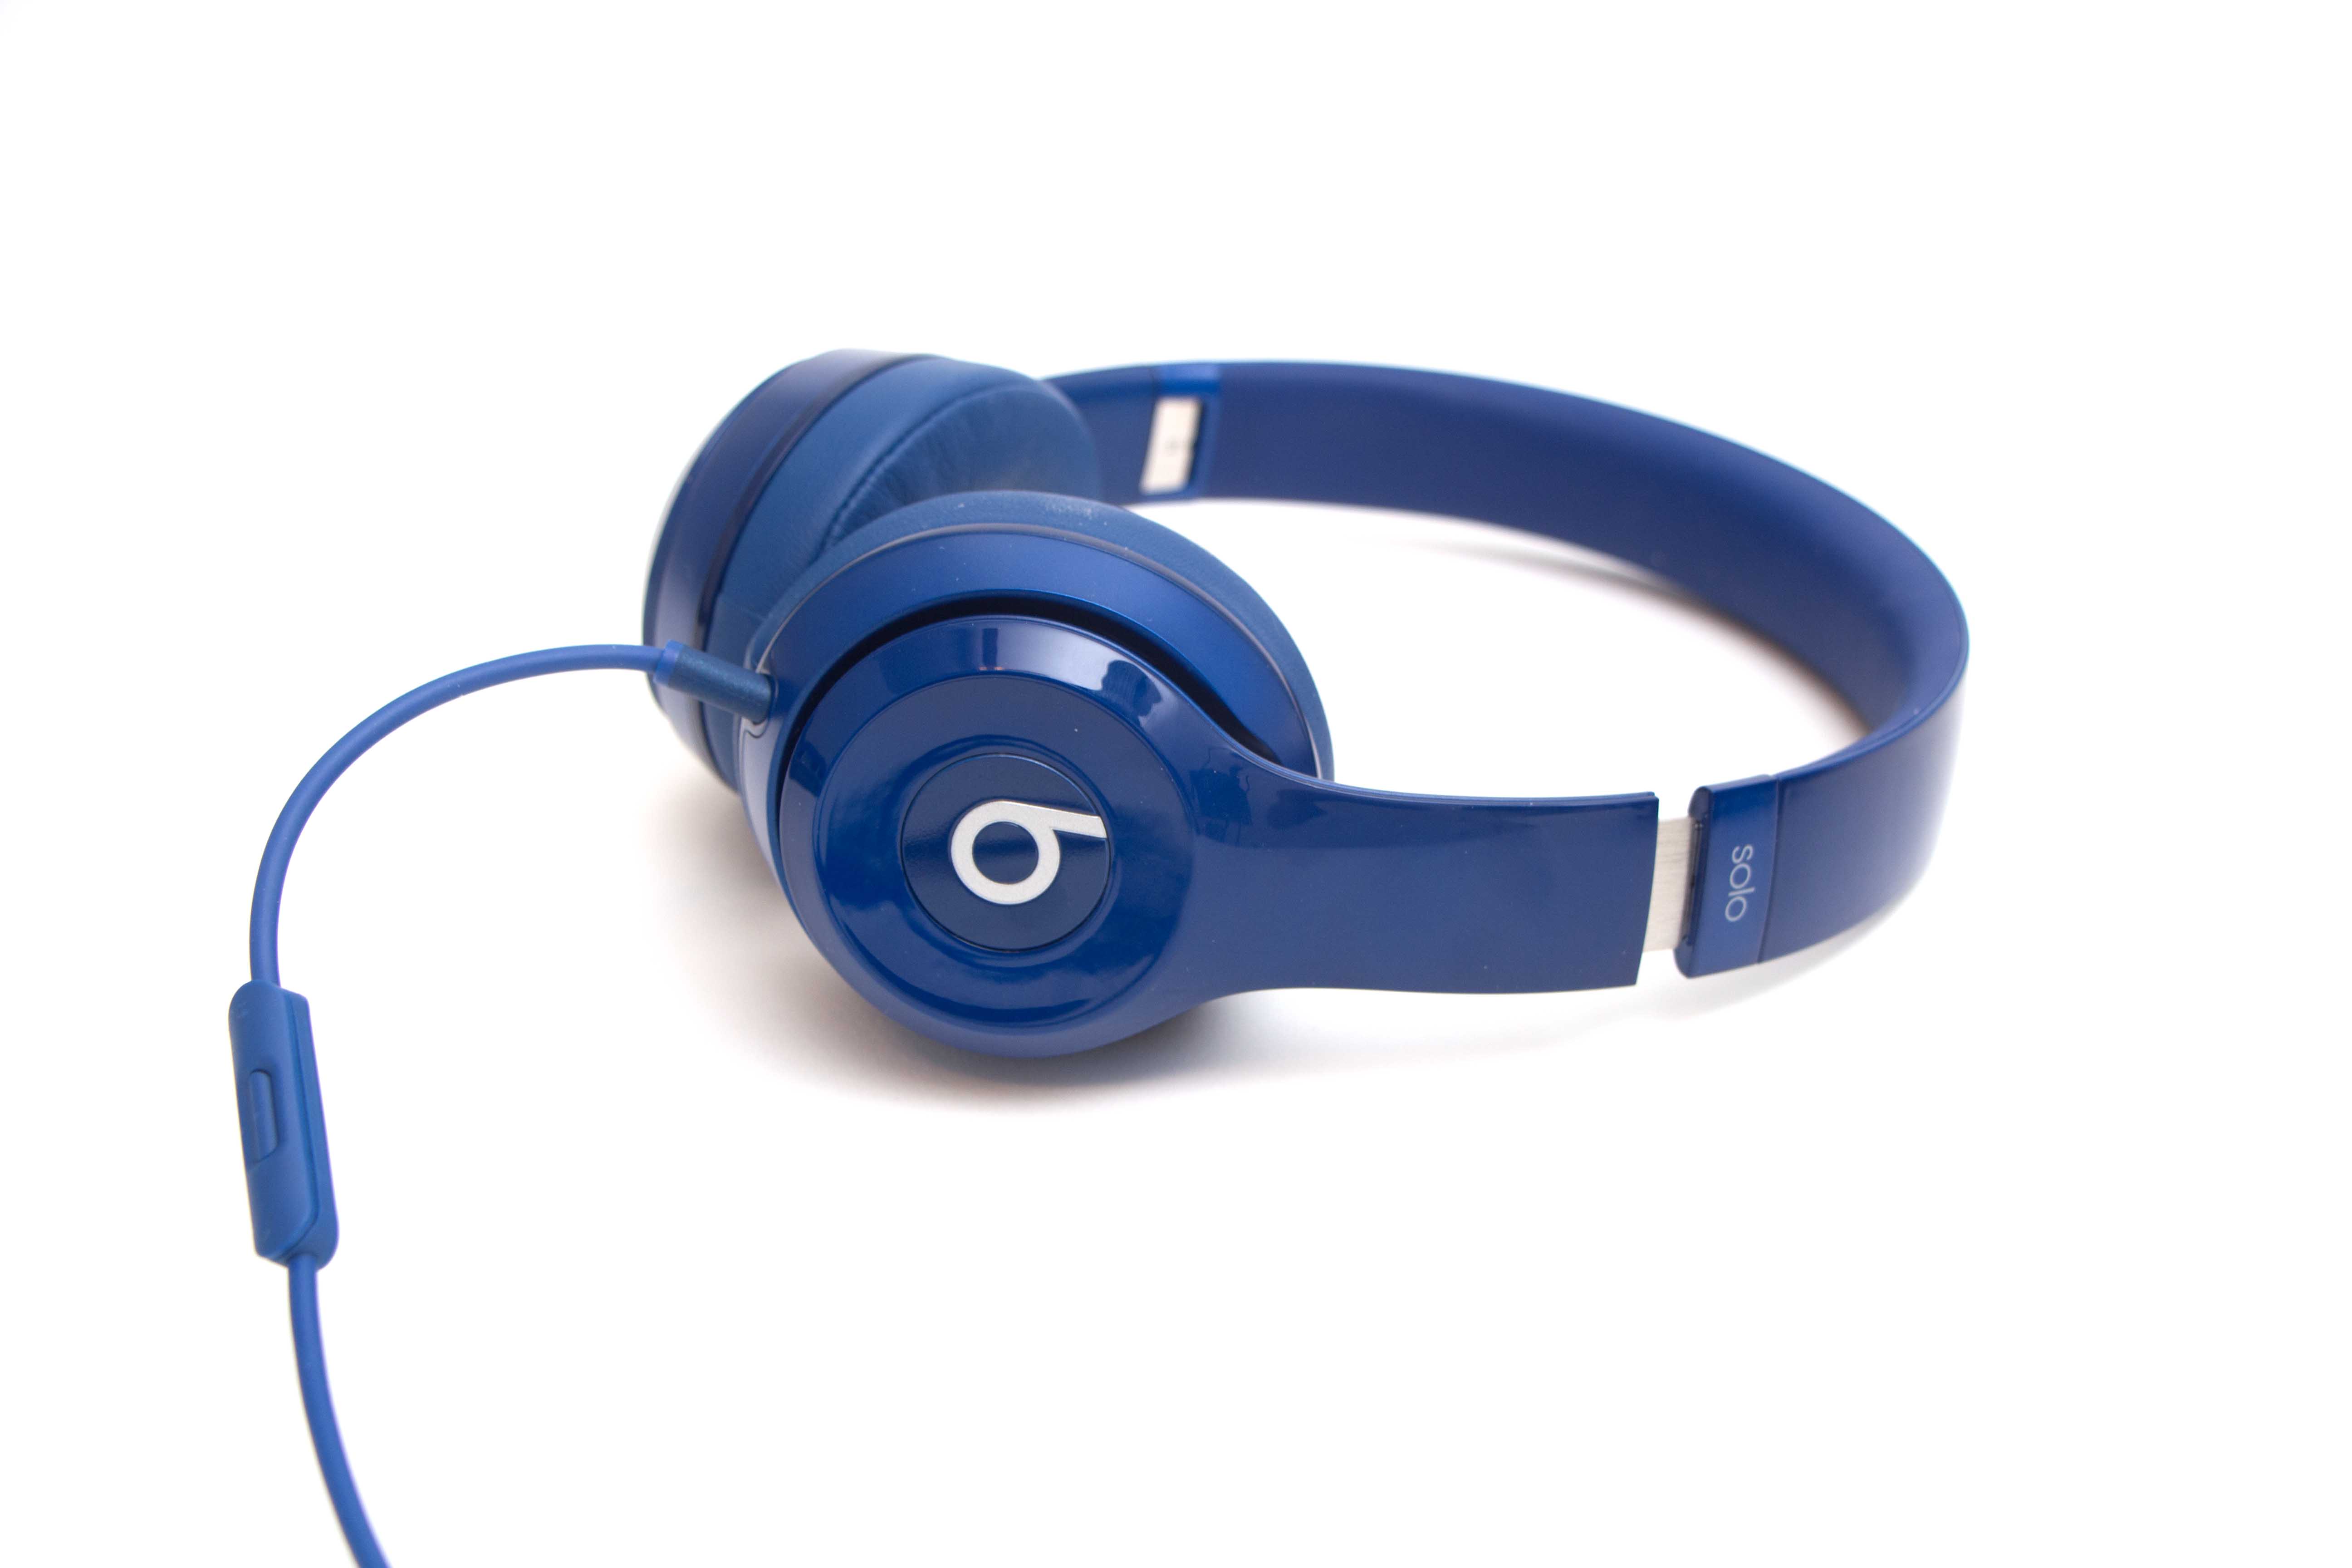 blue beats cord